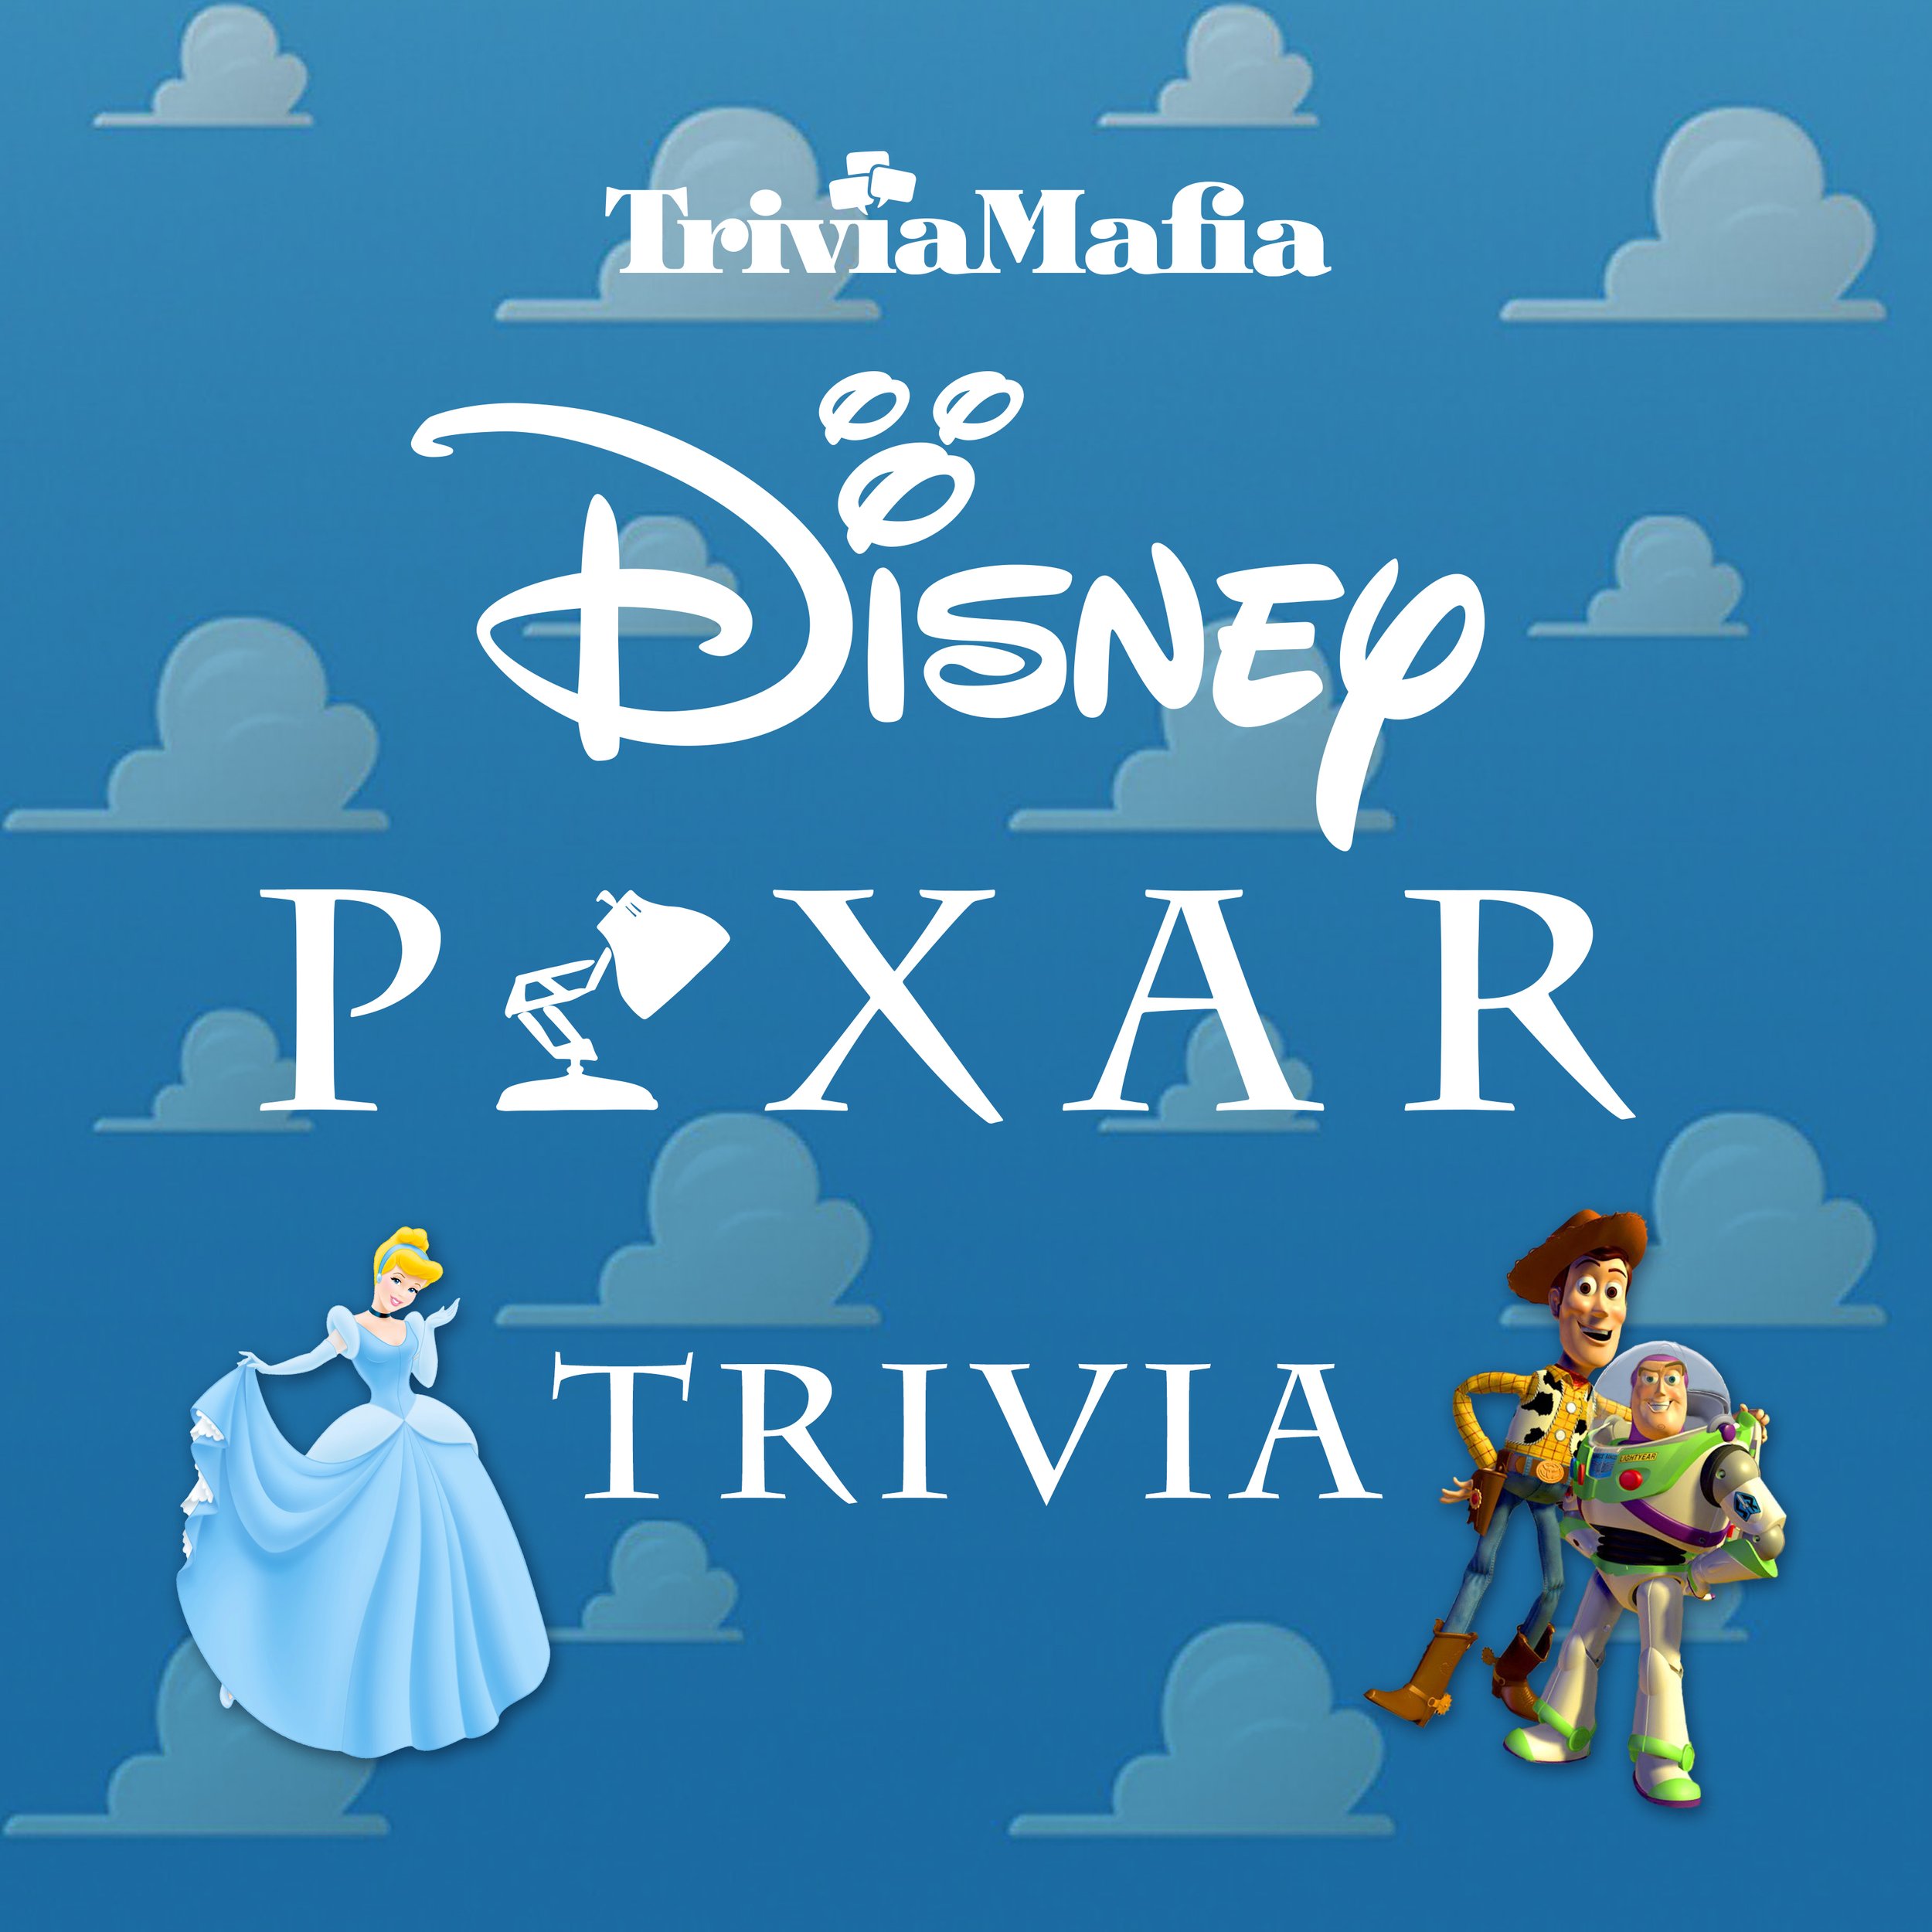 TM Disney Pixar Square.jpg